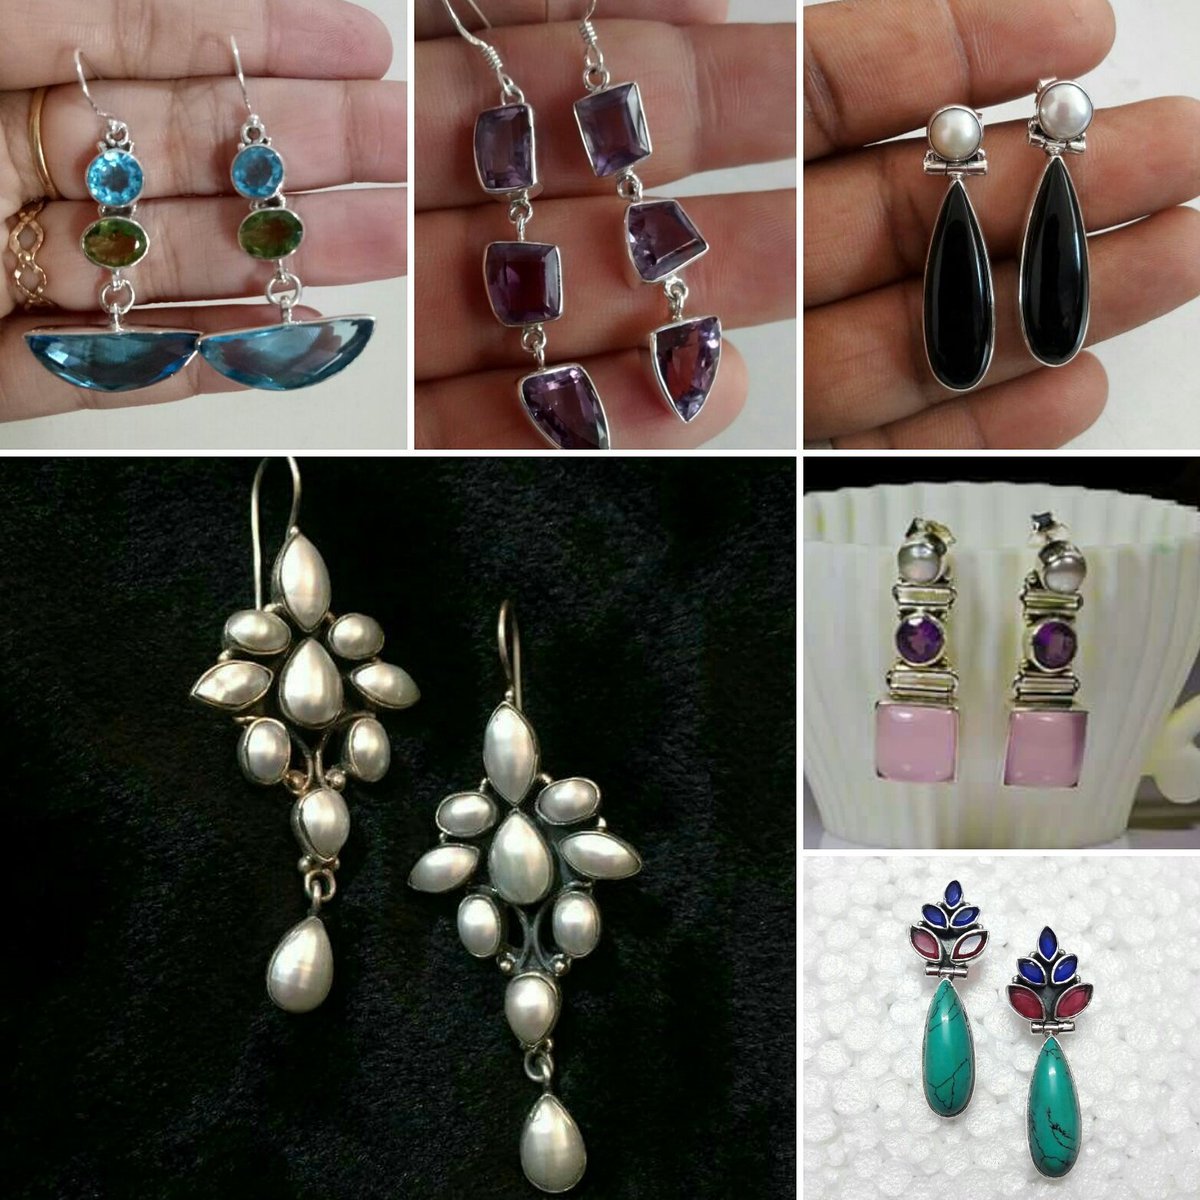 I have enough #jewelry said No one!
#puresilverearrings  #elegantstuds #elegantdangle #workwearjewellery for the #trendyjewellery lover!